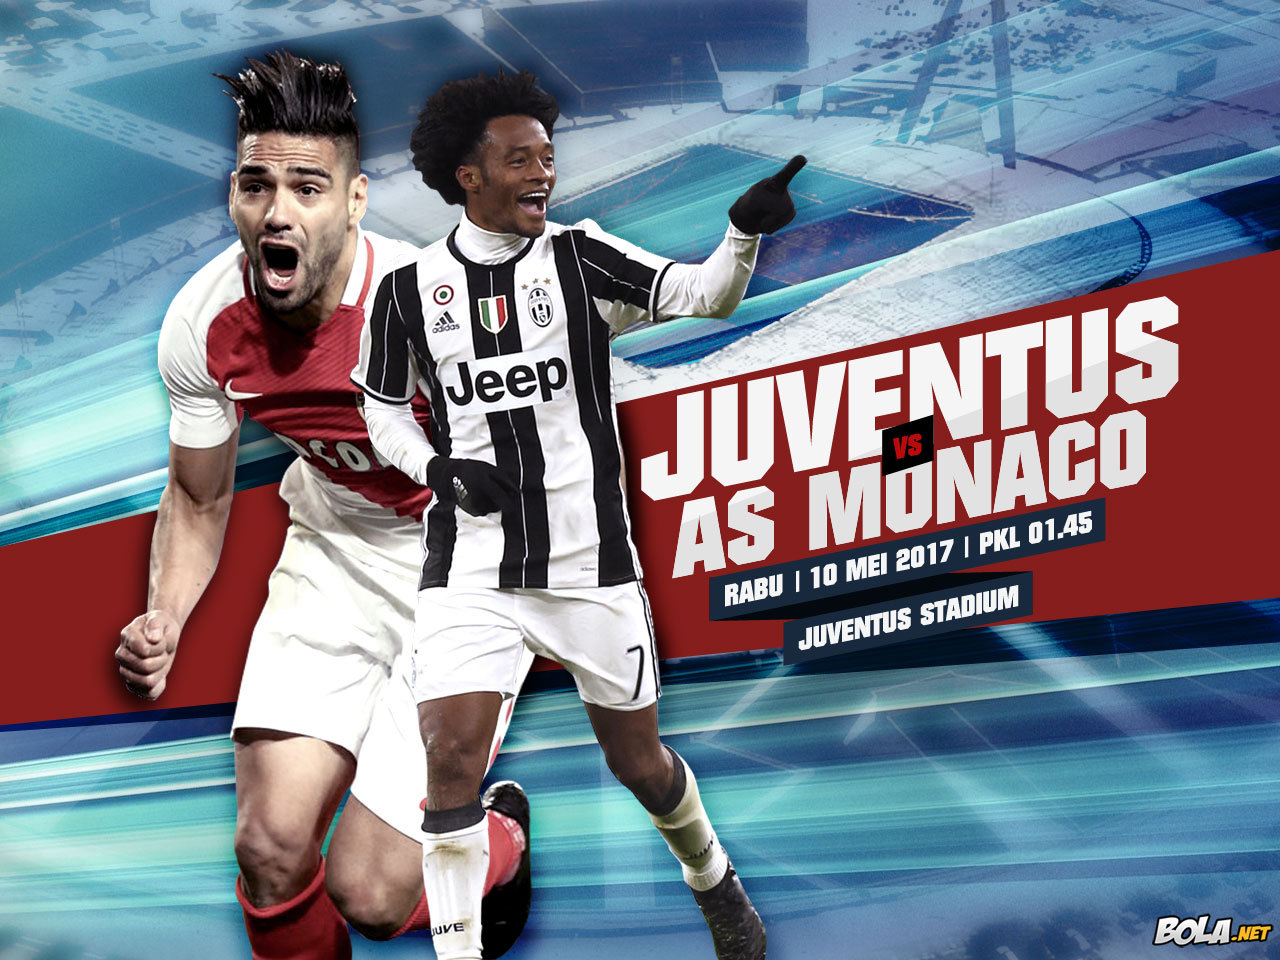 Deskripsi : Wallpaper Juventus Vs As Monaco, size: 1280x960